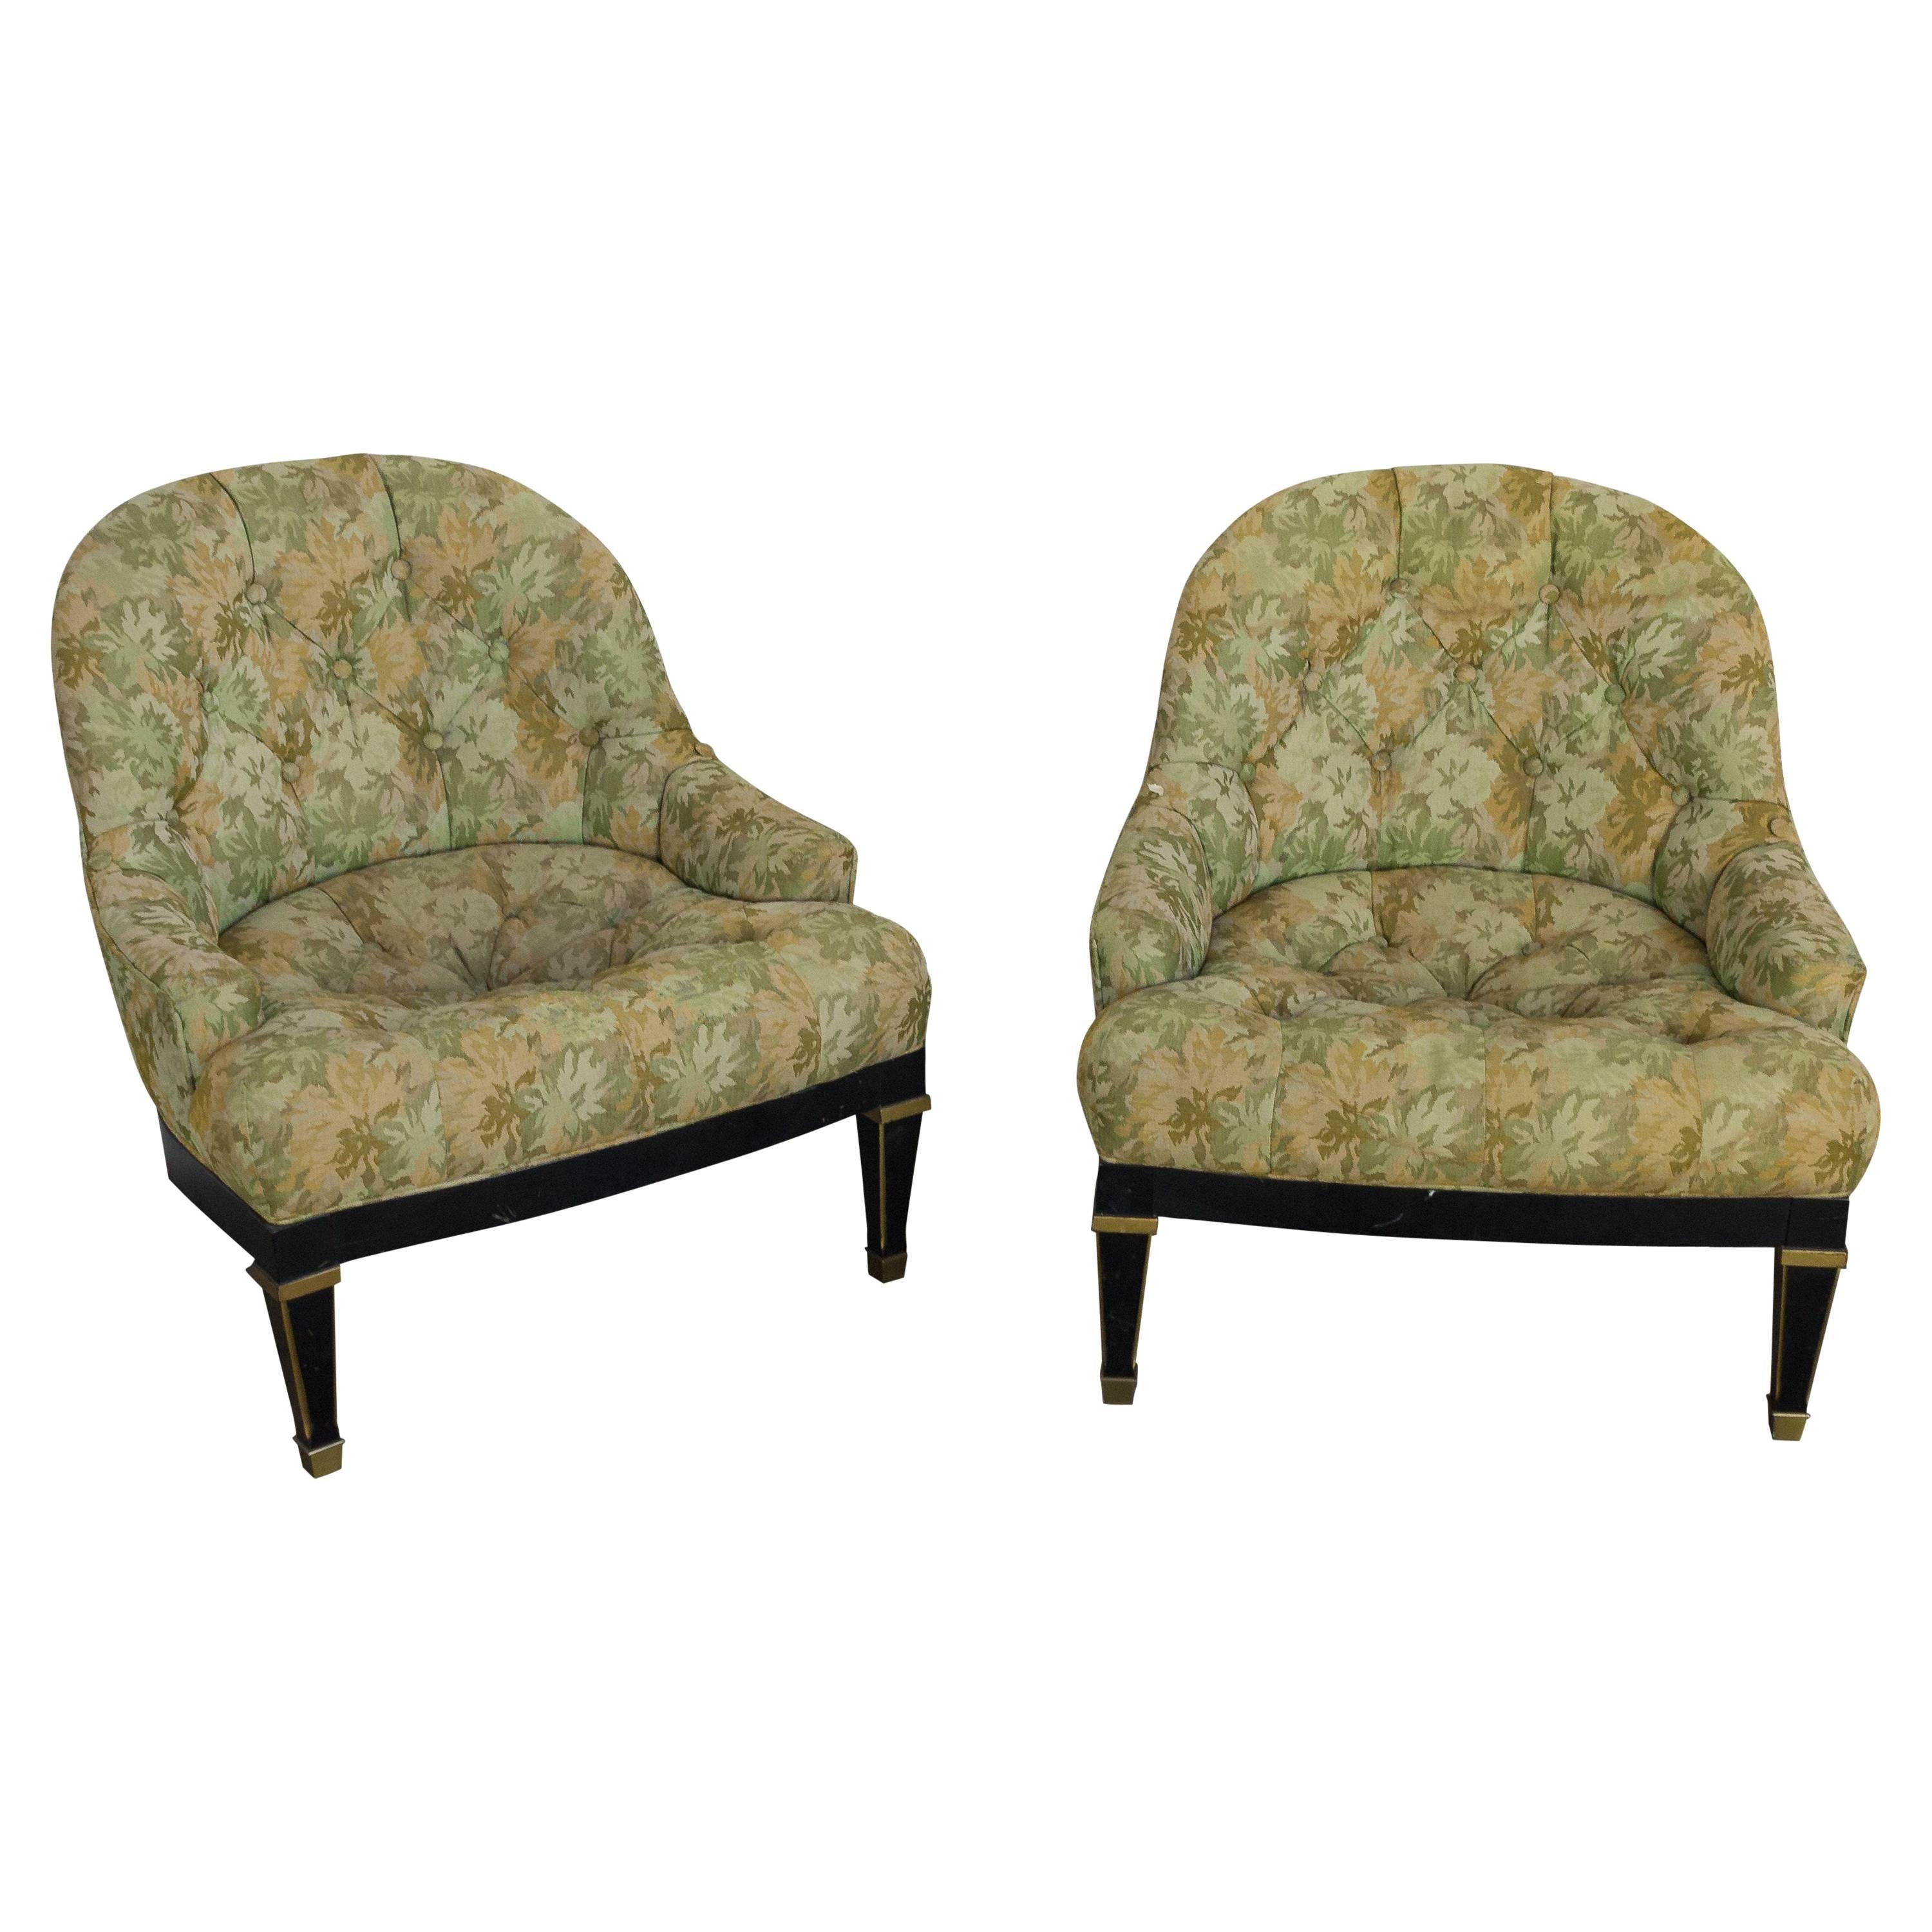 Pair of American Midcentury Chairs